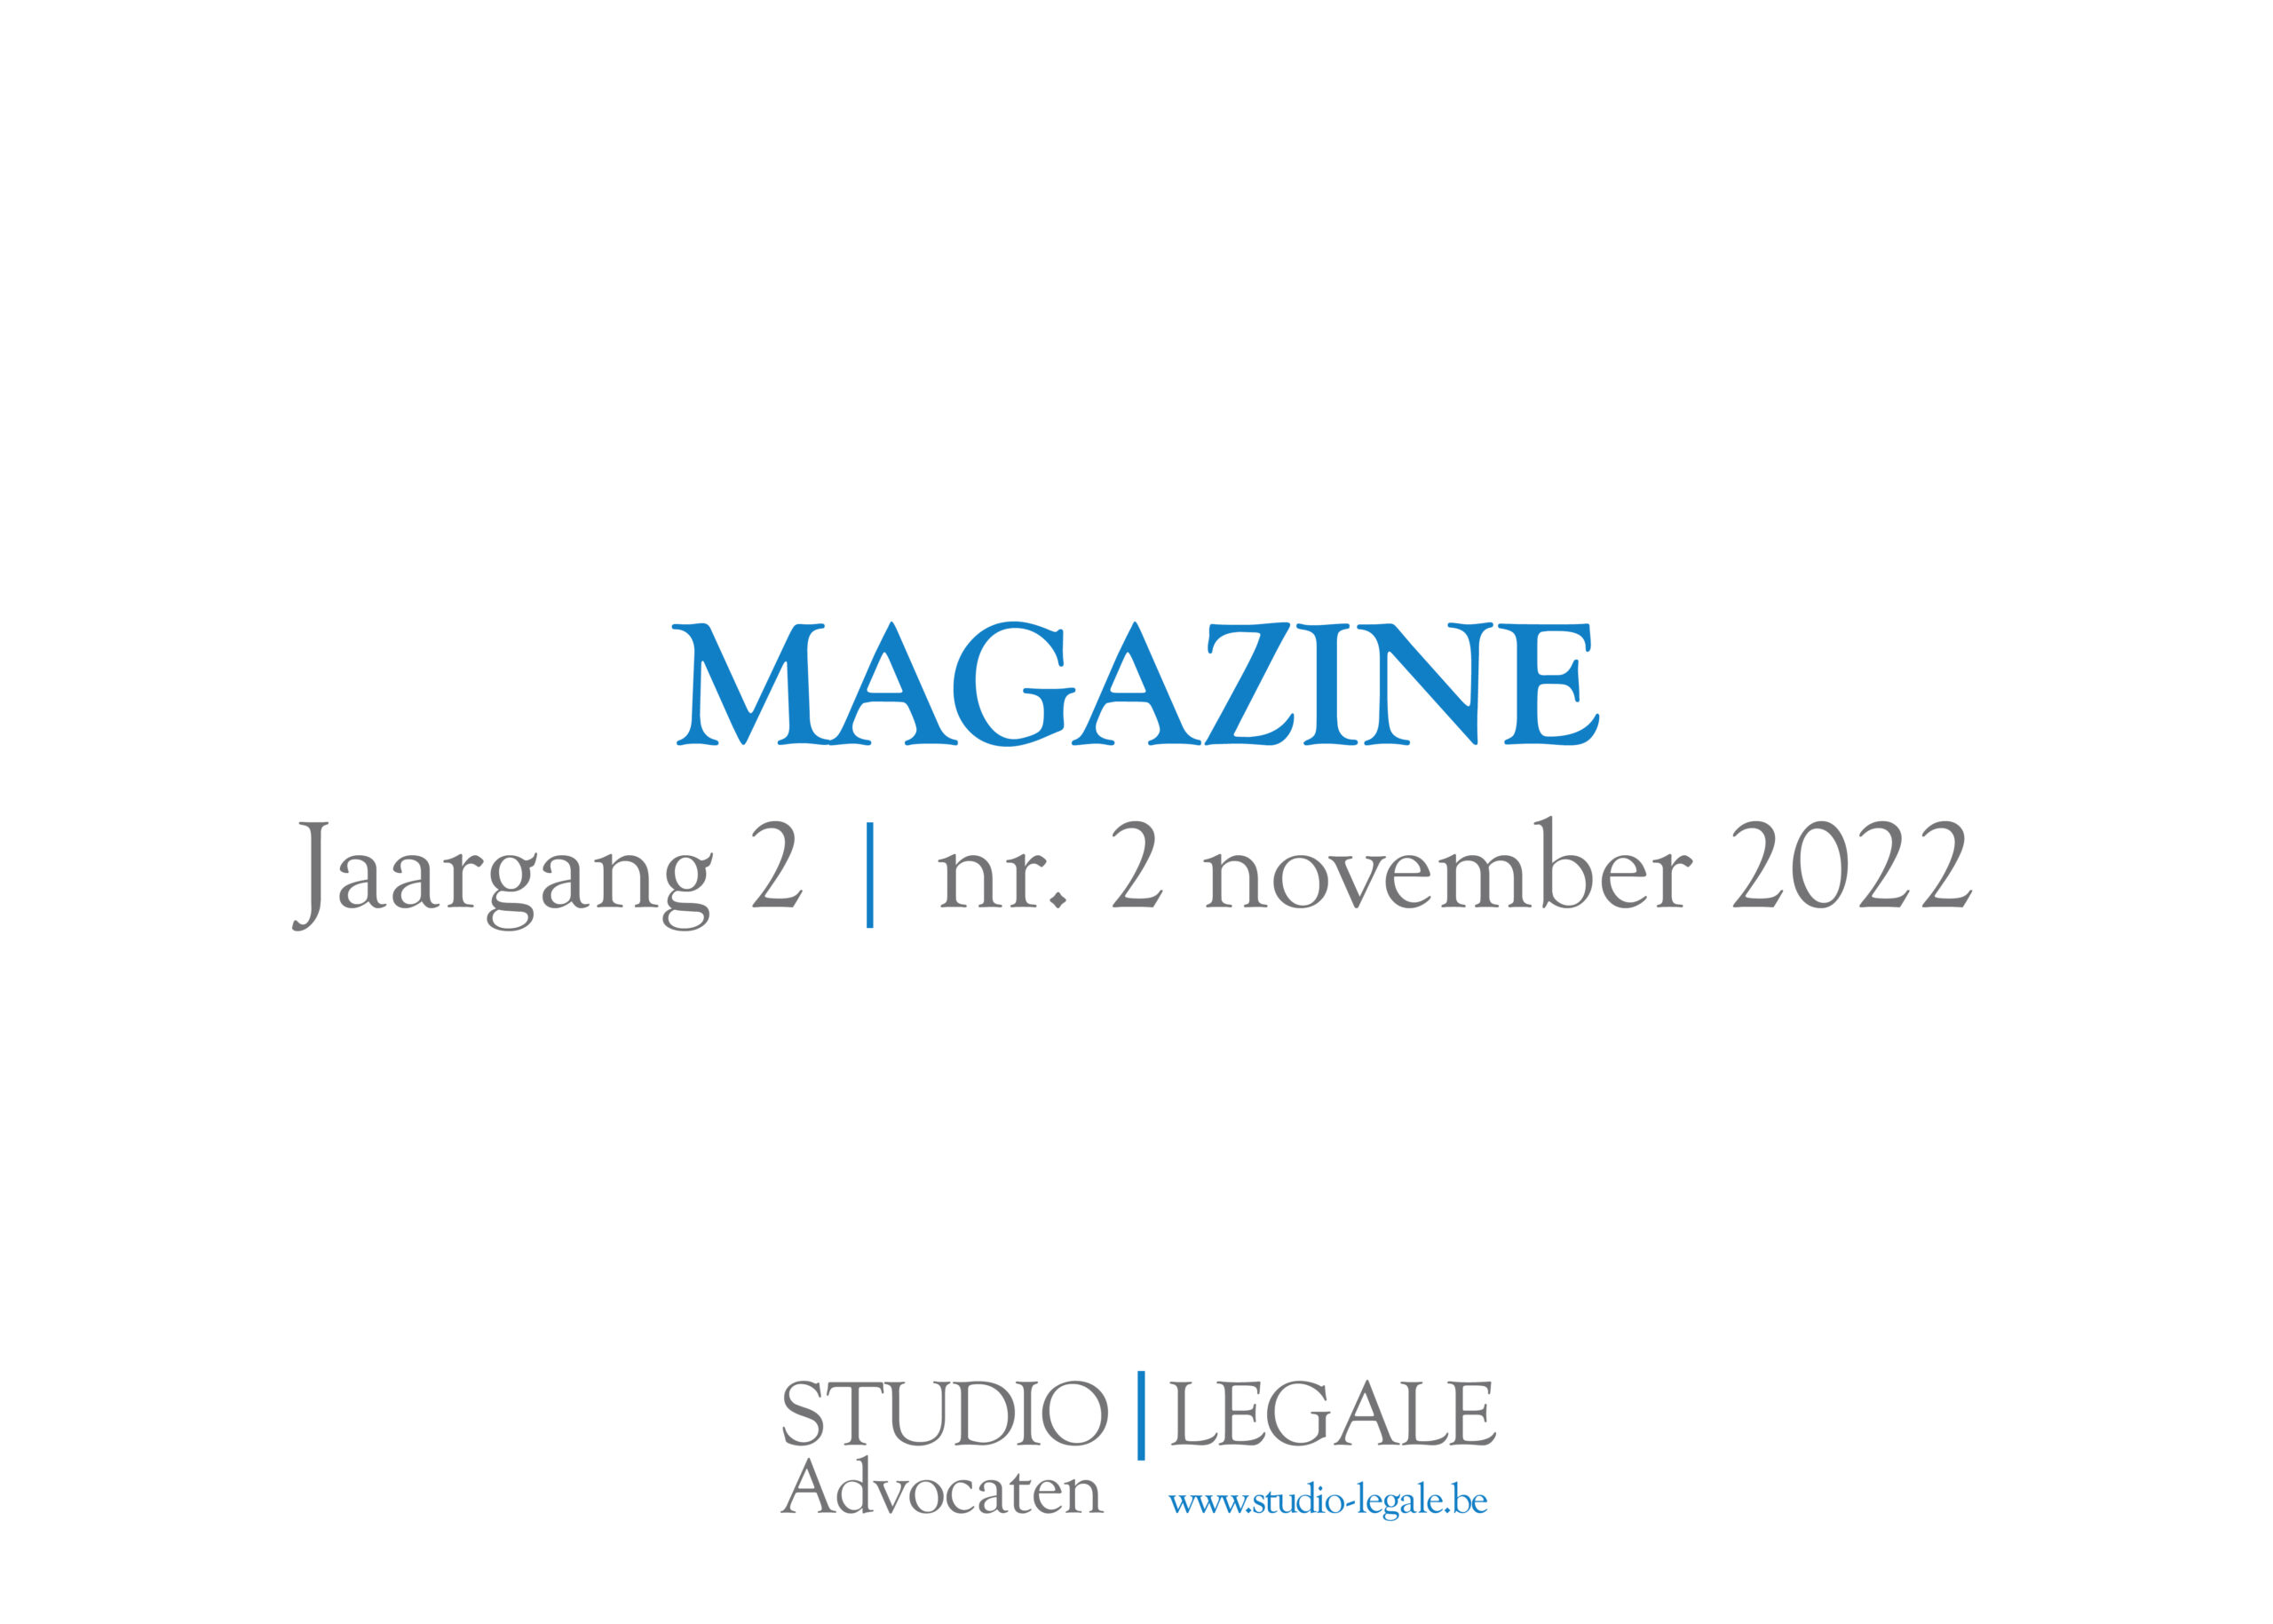 STUDIO | LEGALE Magazine | Jaargang 2 | nr. 2 november 2022